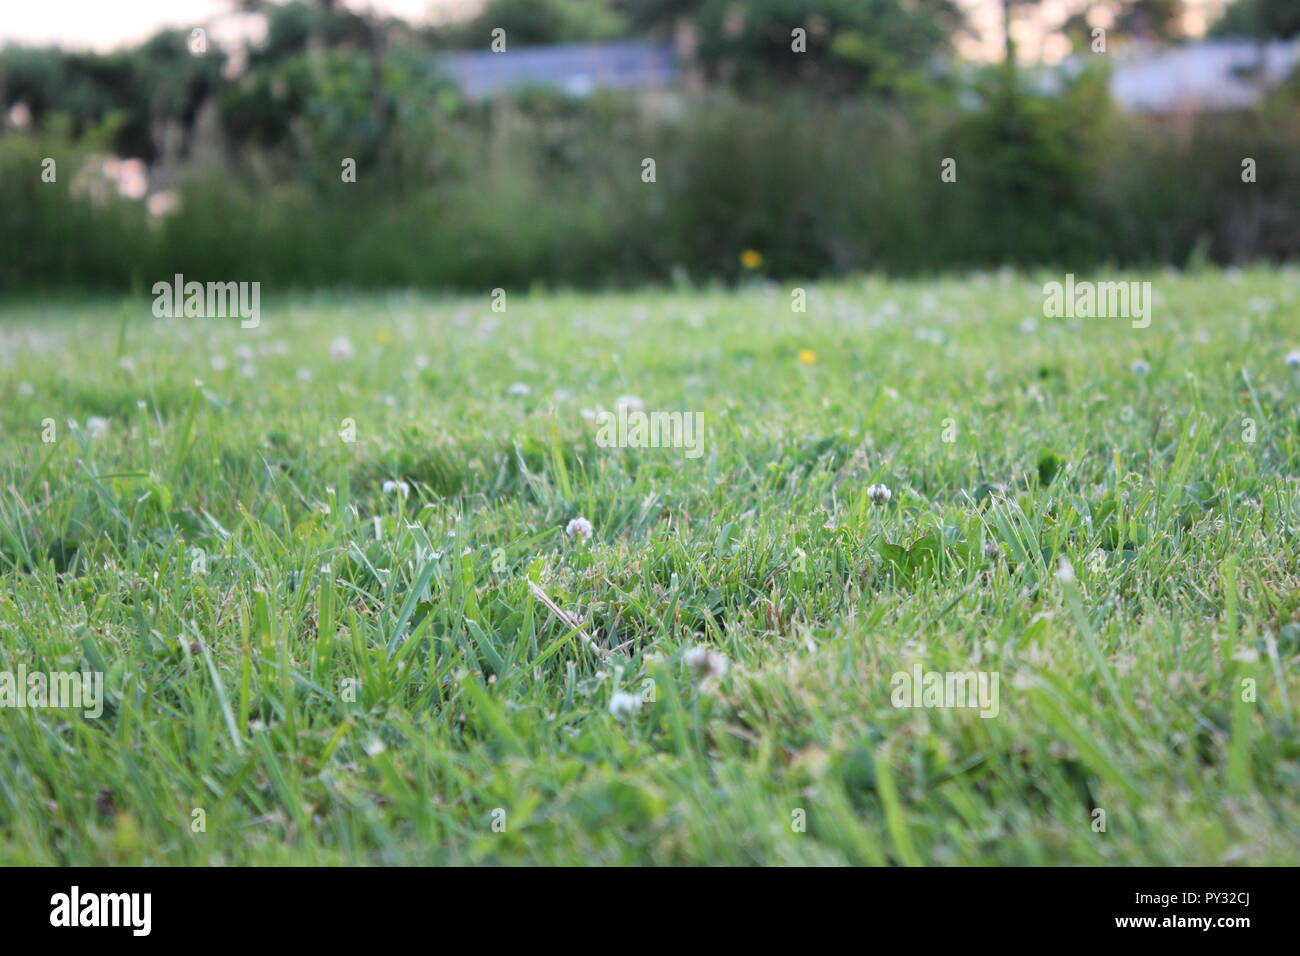 grassy field Stock Photo